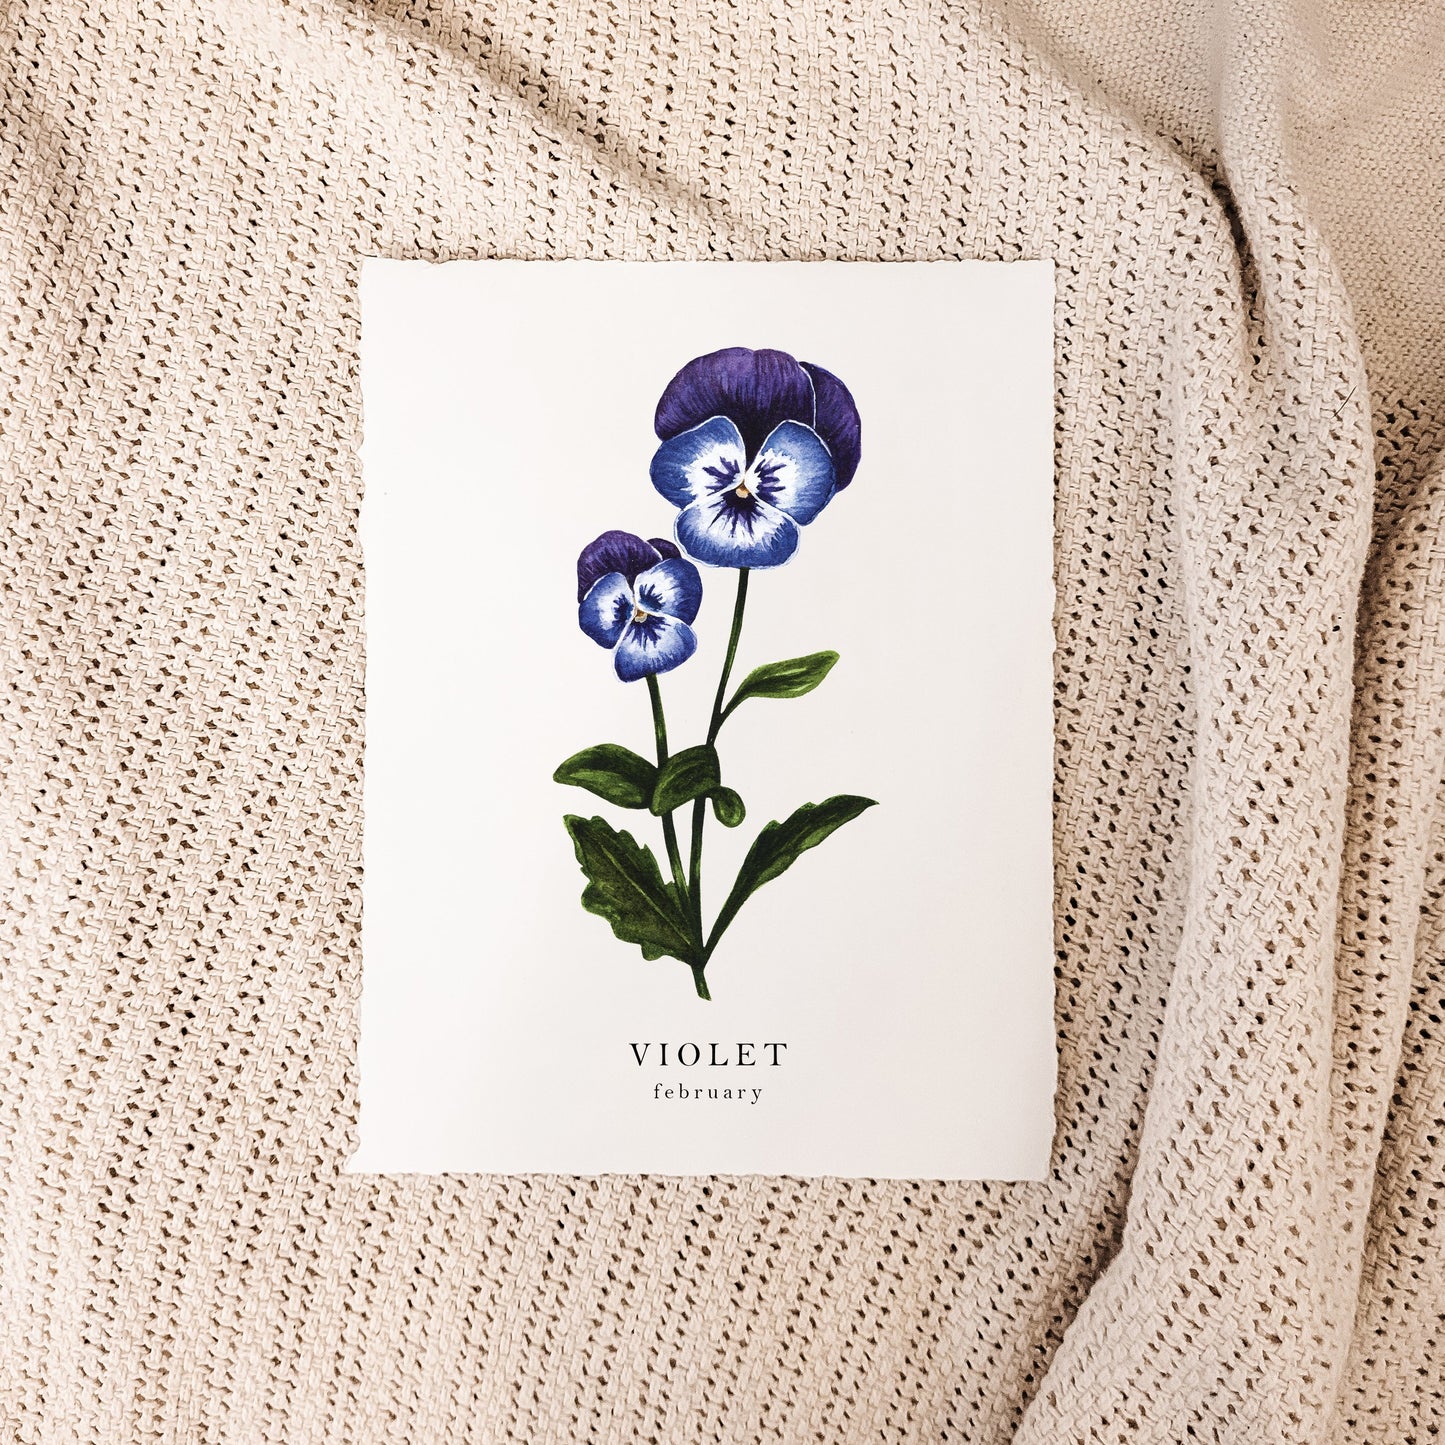 February - Violet